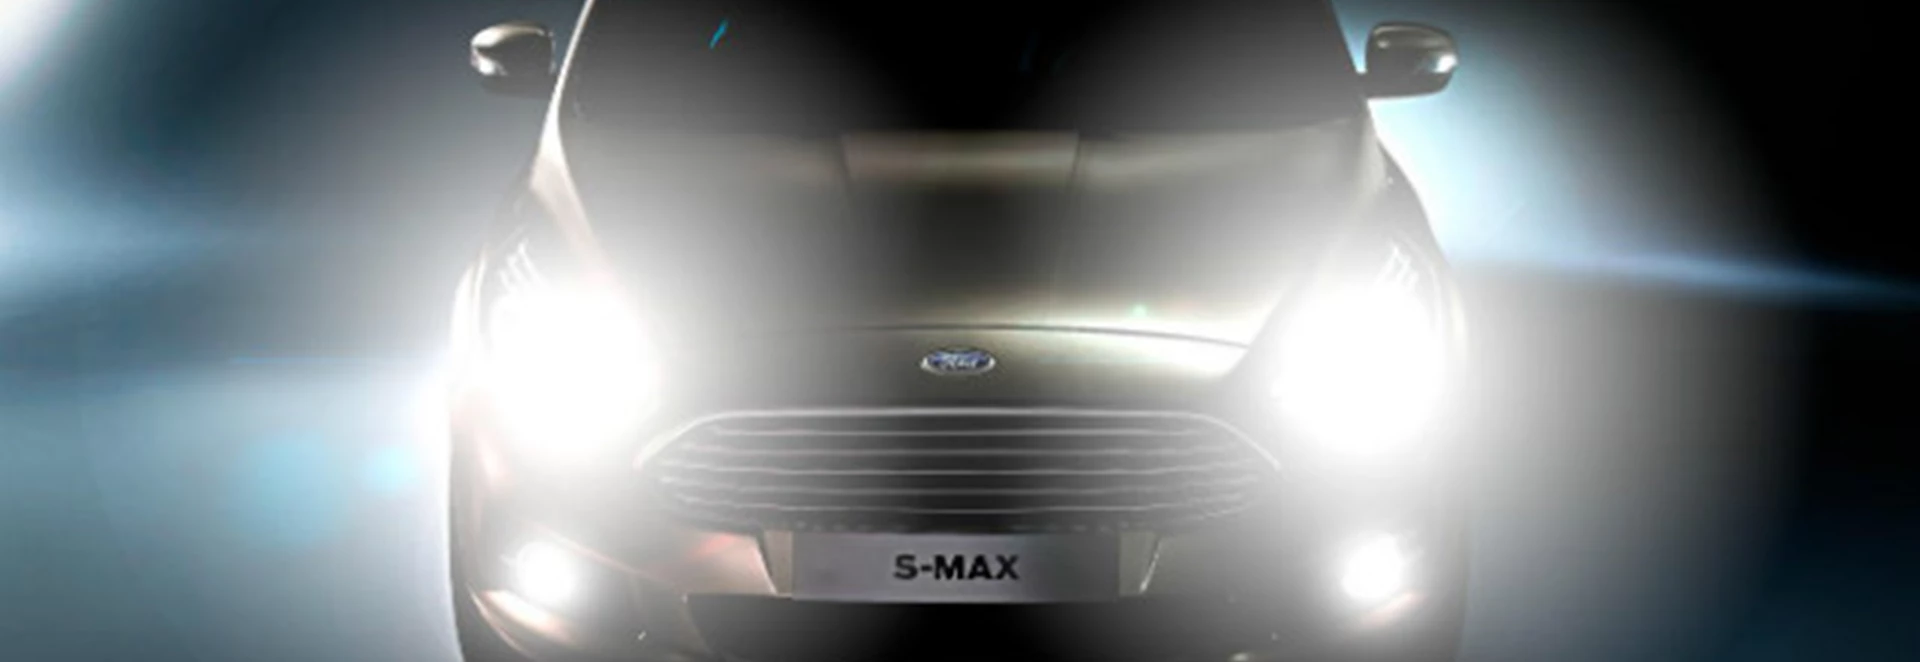 How Automatic Headlights Work • Cars Simplified: Lighting